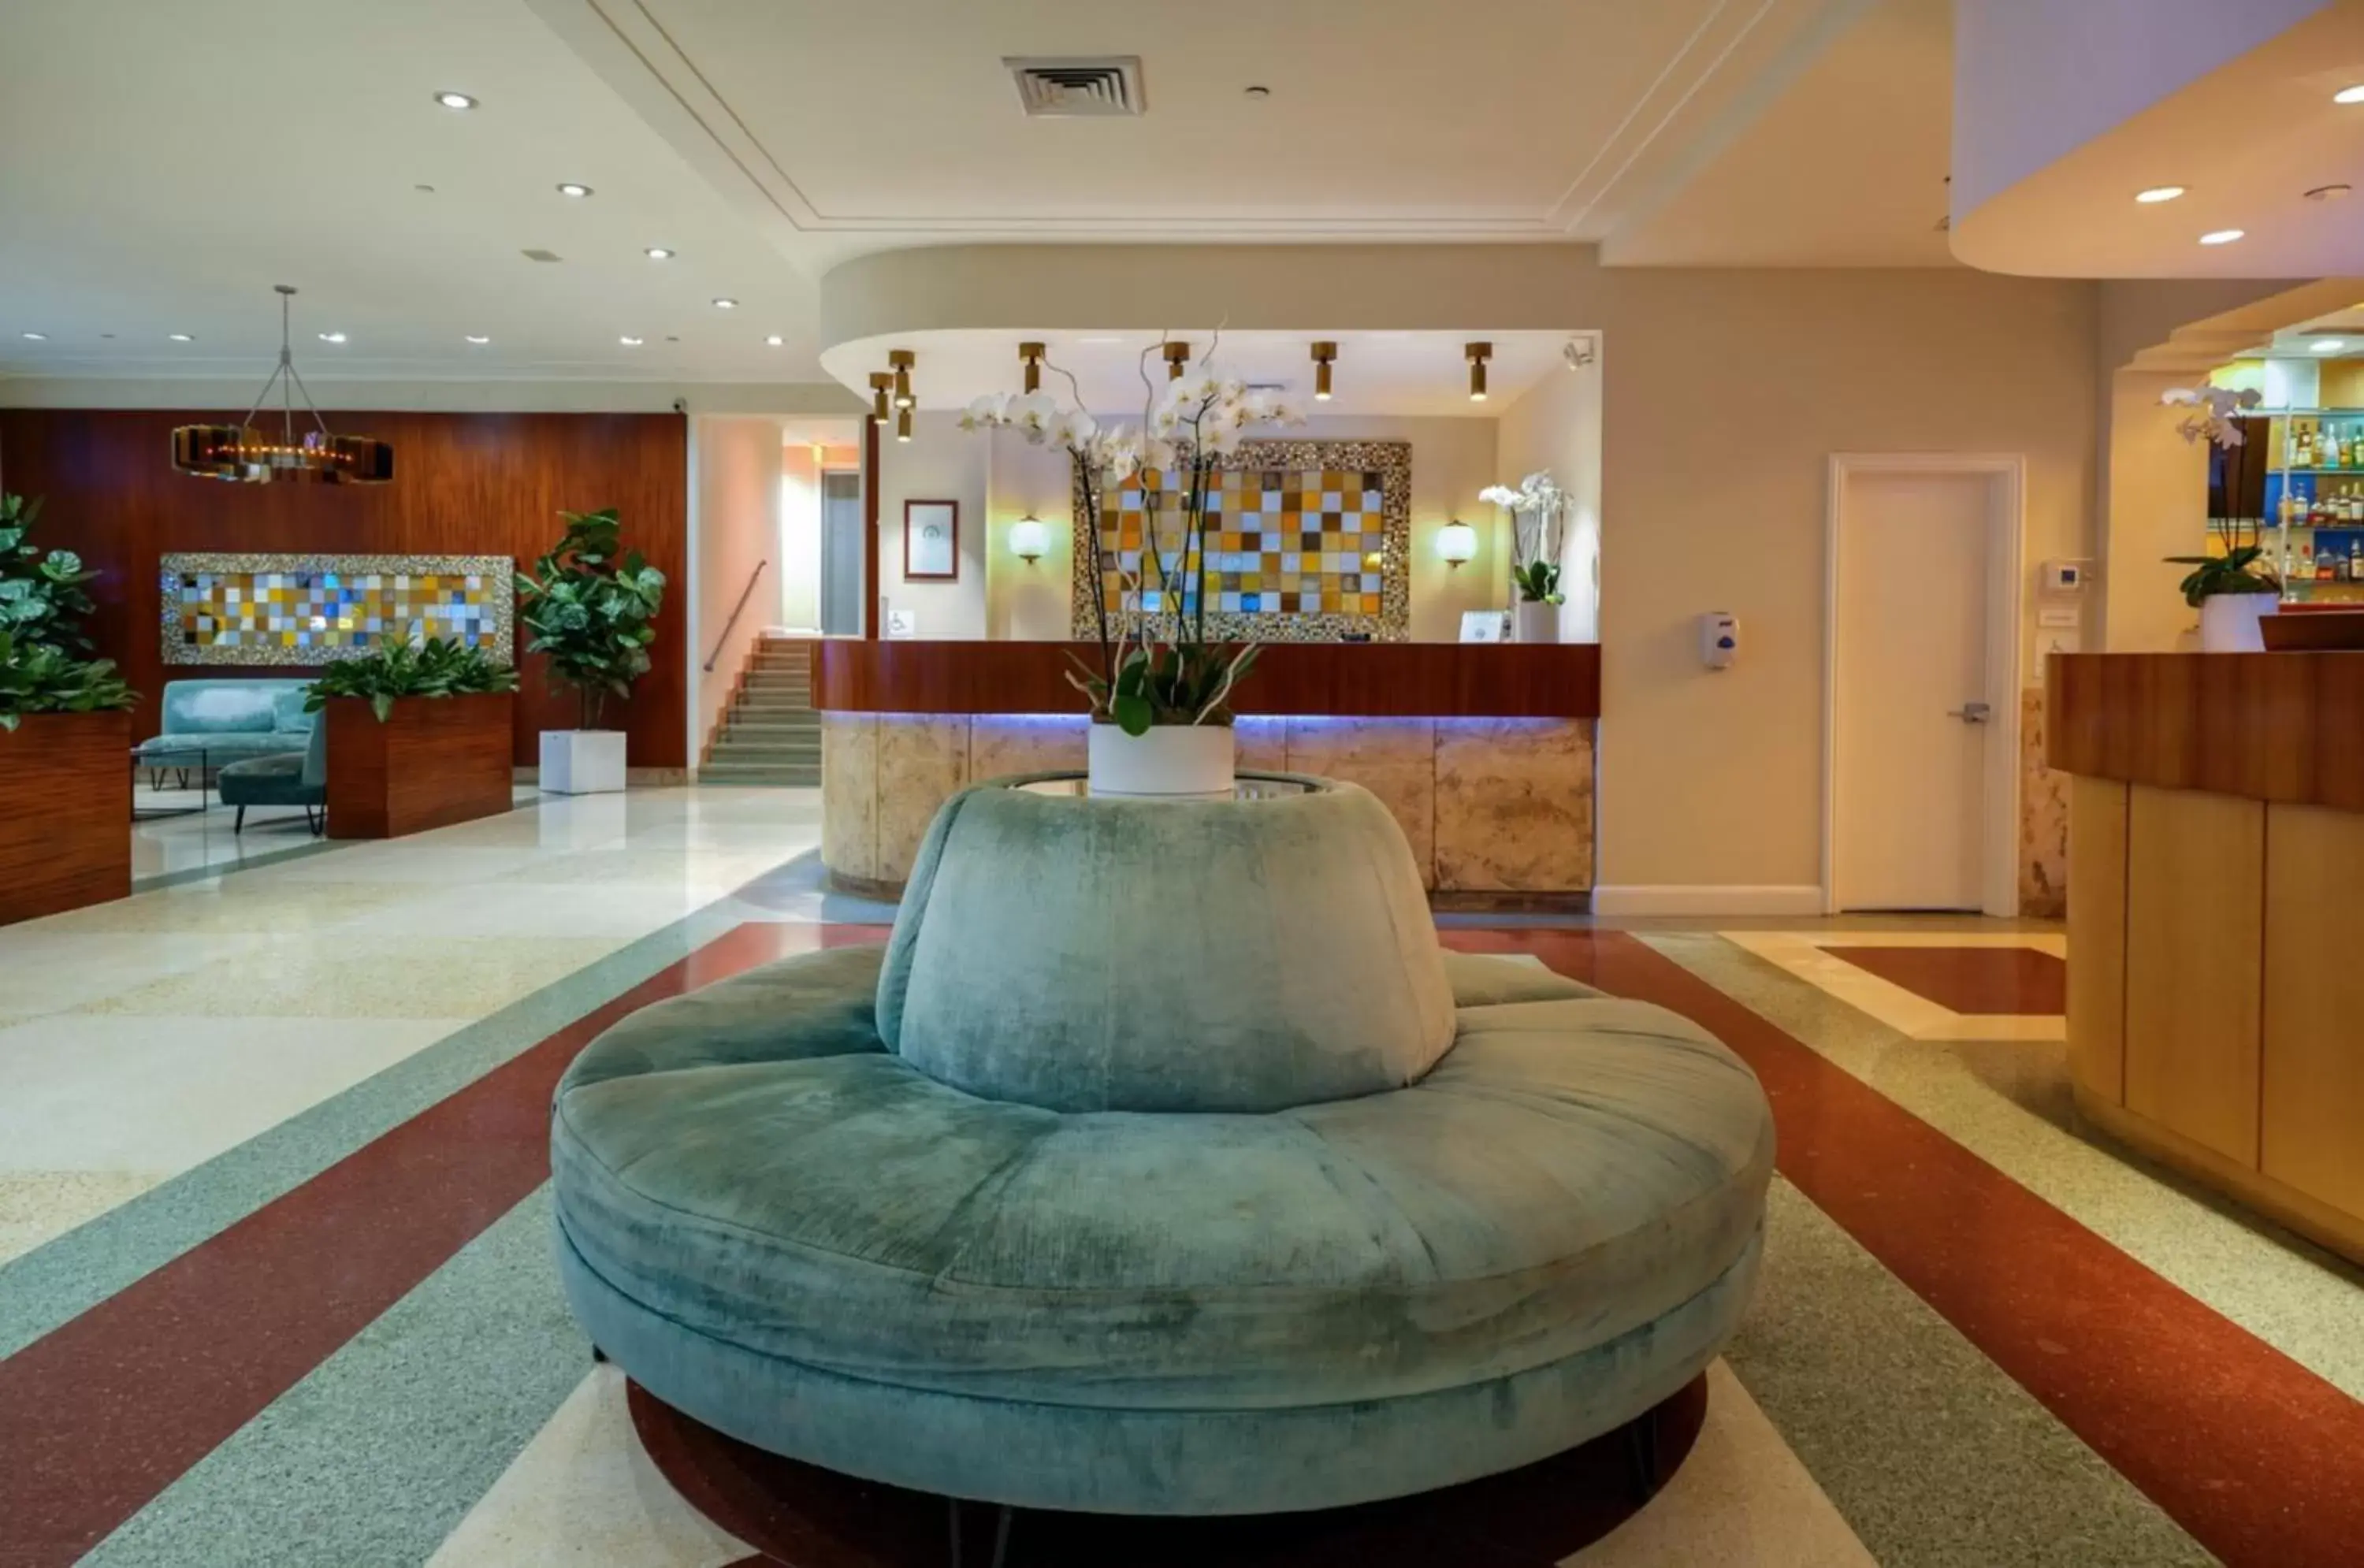 Lobby or reception in The Tony Hotel South Beach